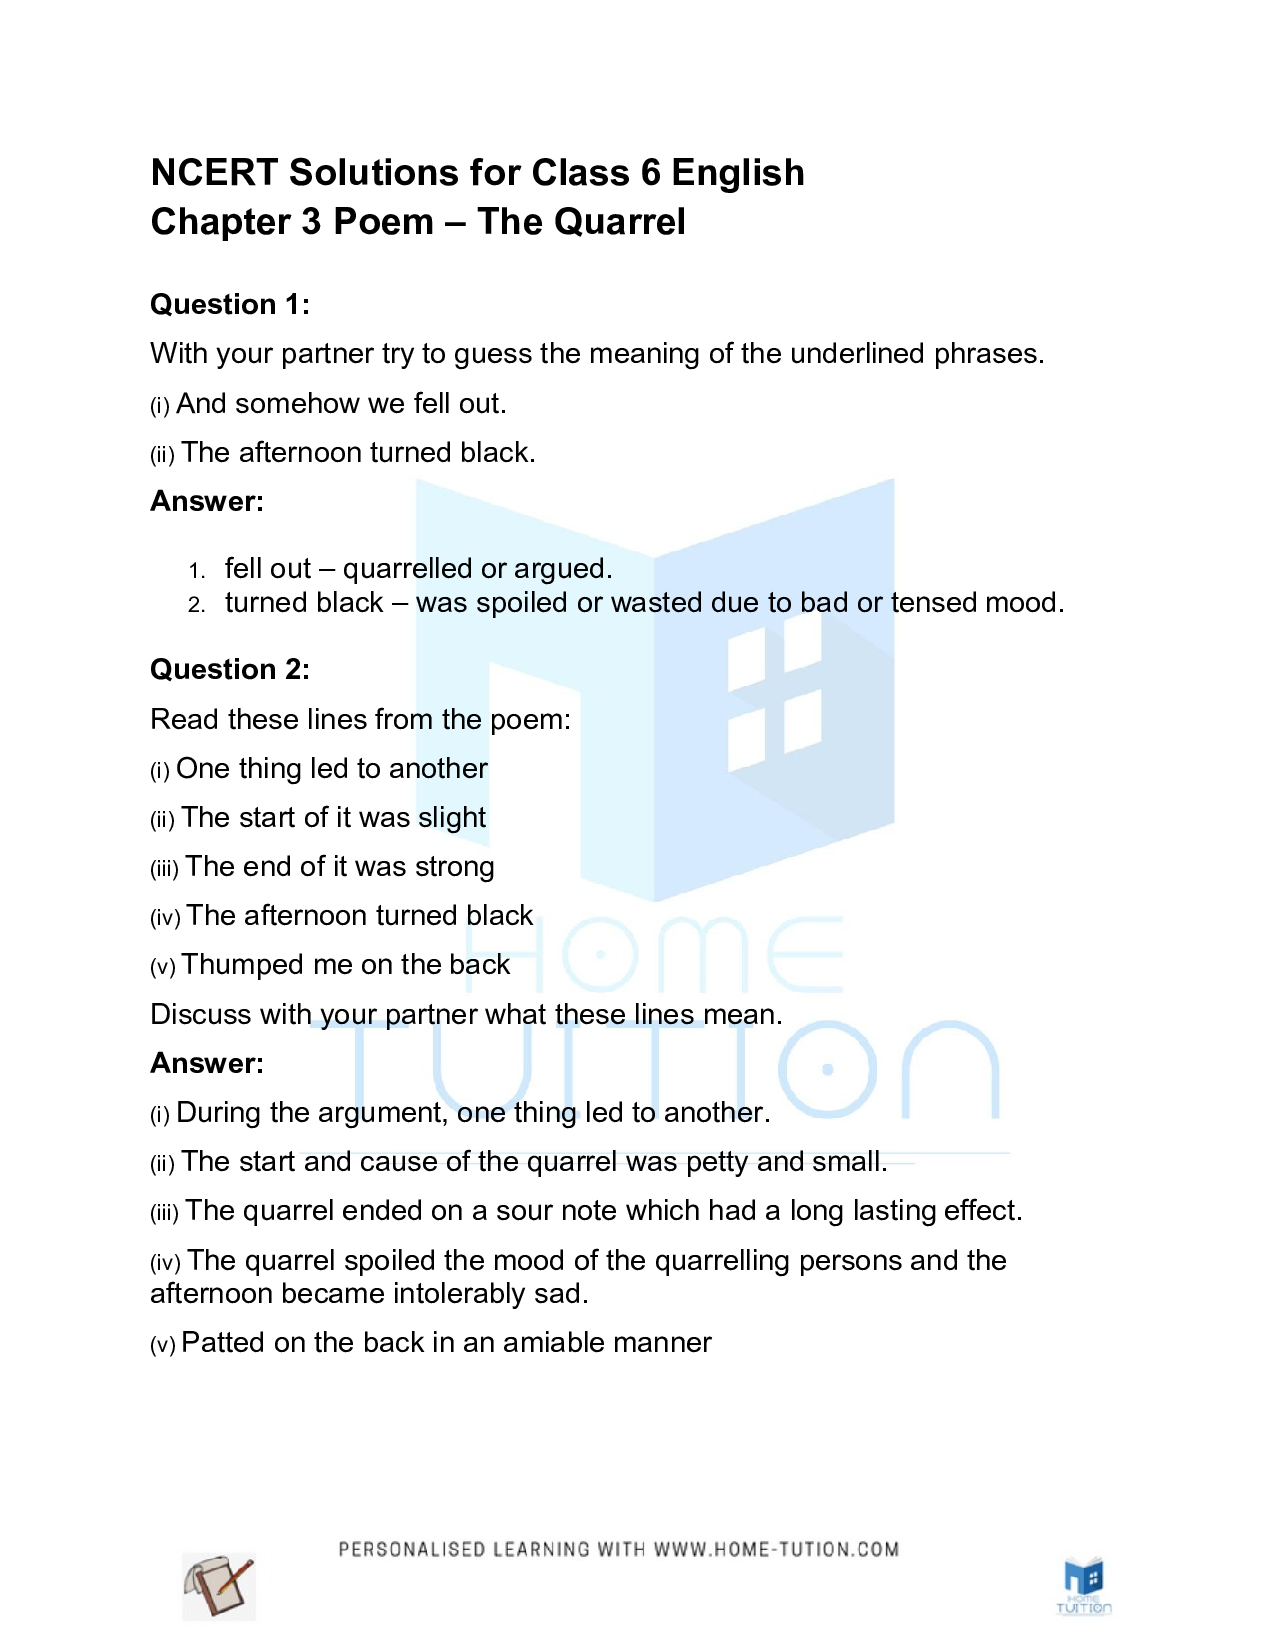 Poem 3 The Quarrel